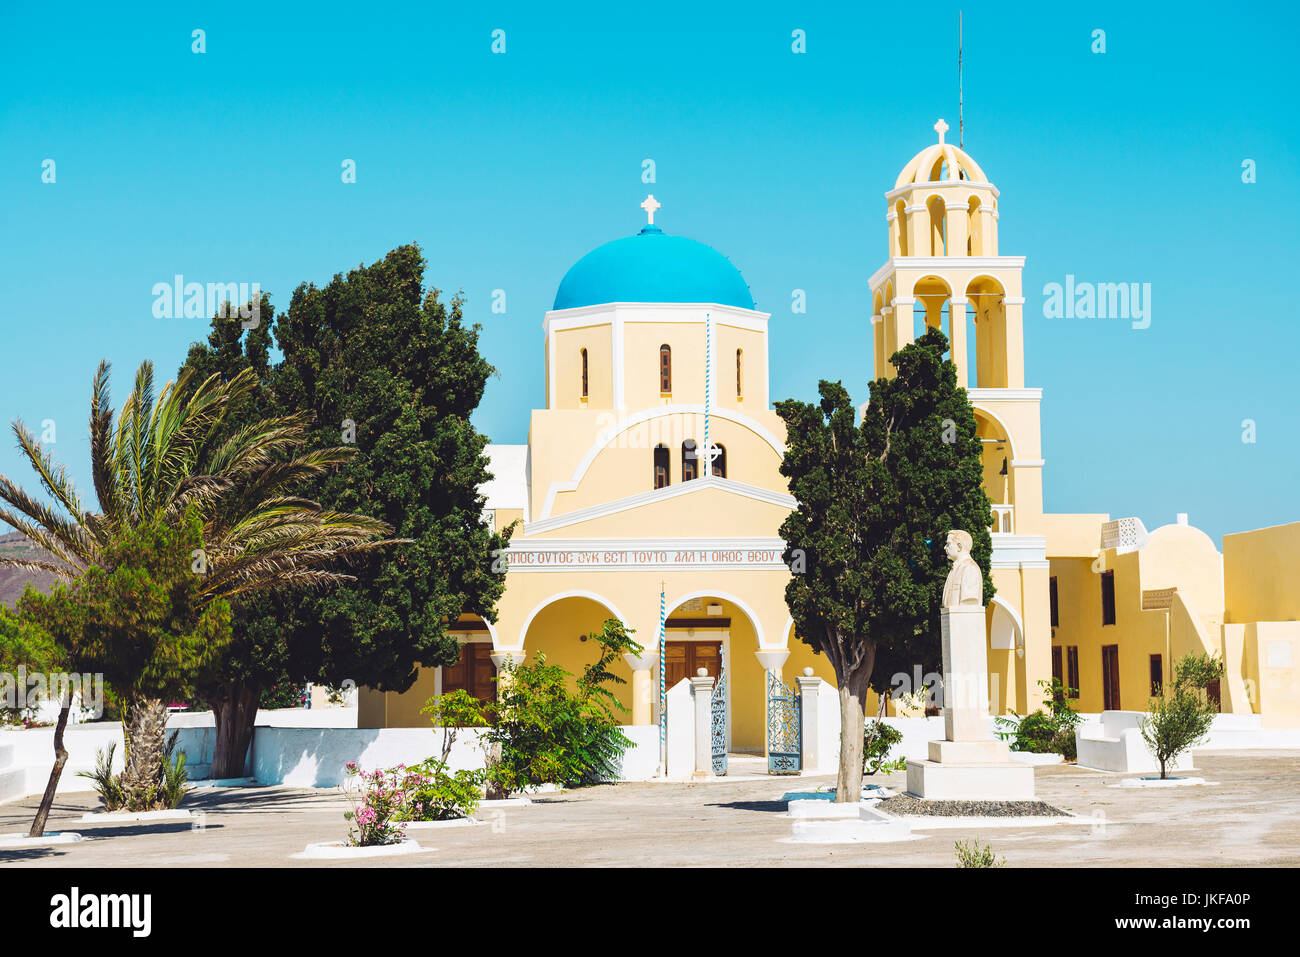 Oia, Santorini, Cyclades islands, Greece. Saint George Orthodox Church in a sunny day Stock Photo